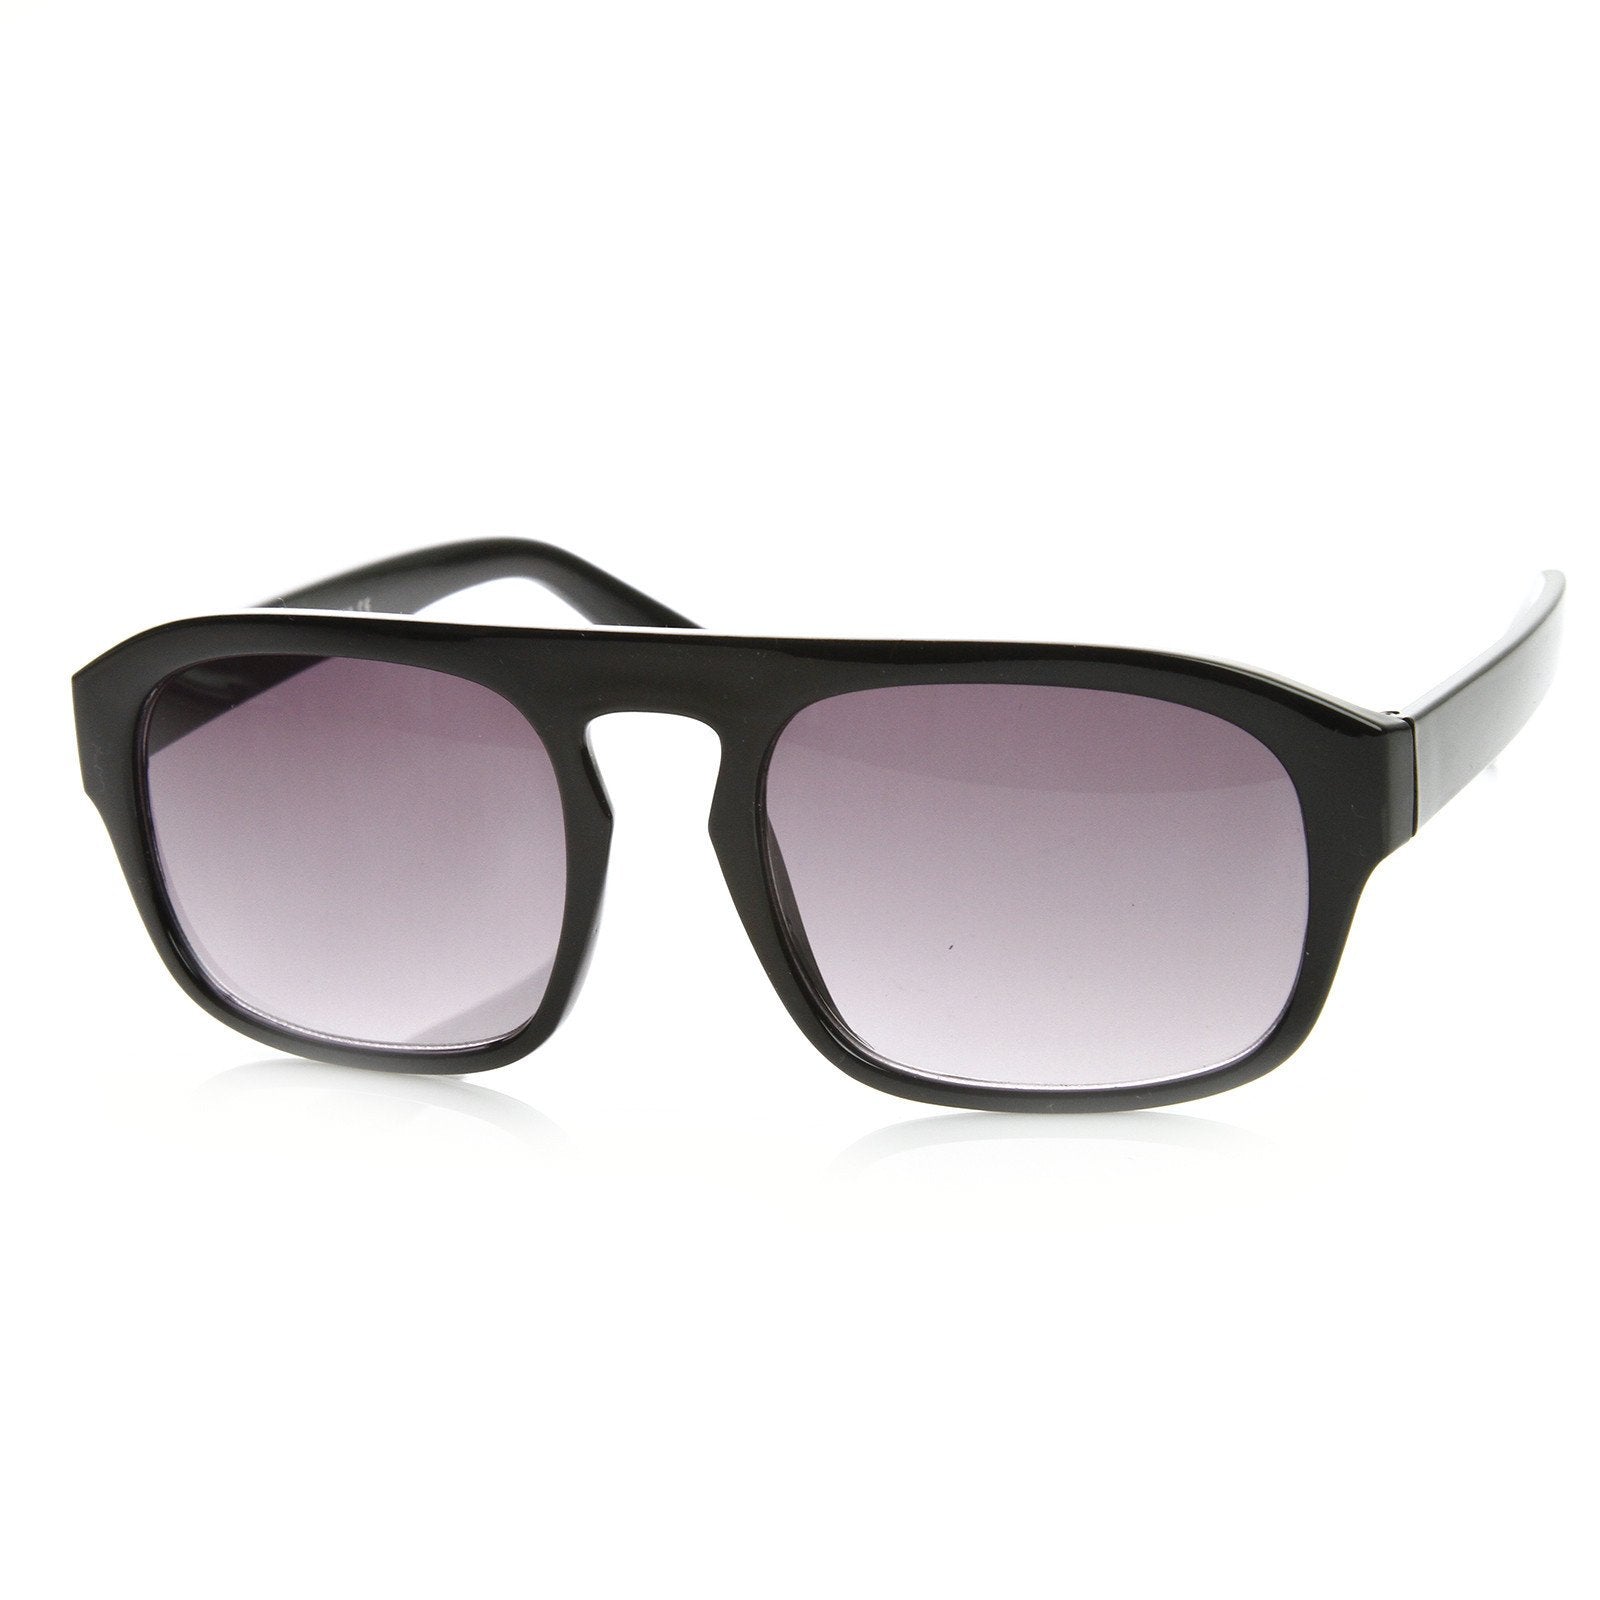 Mens European Fashion Center Cut Square Aviator Sunglasses 8655 Zerouv